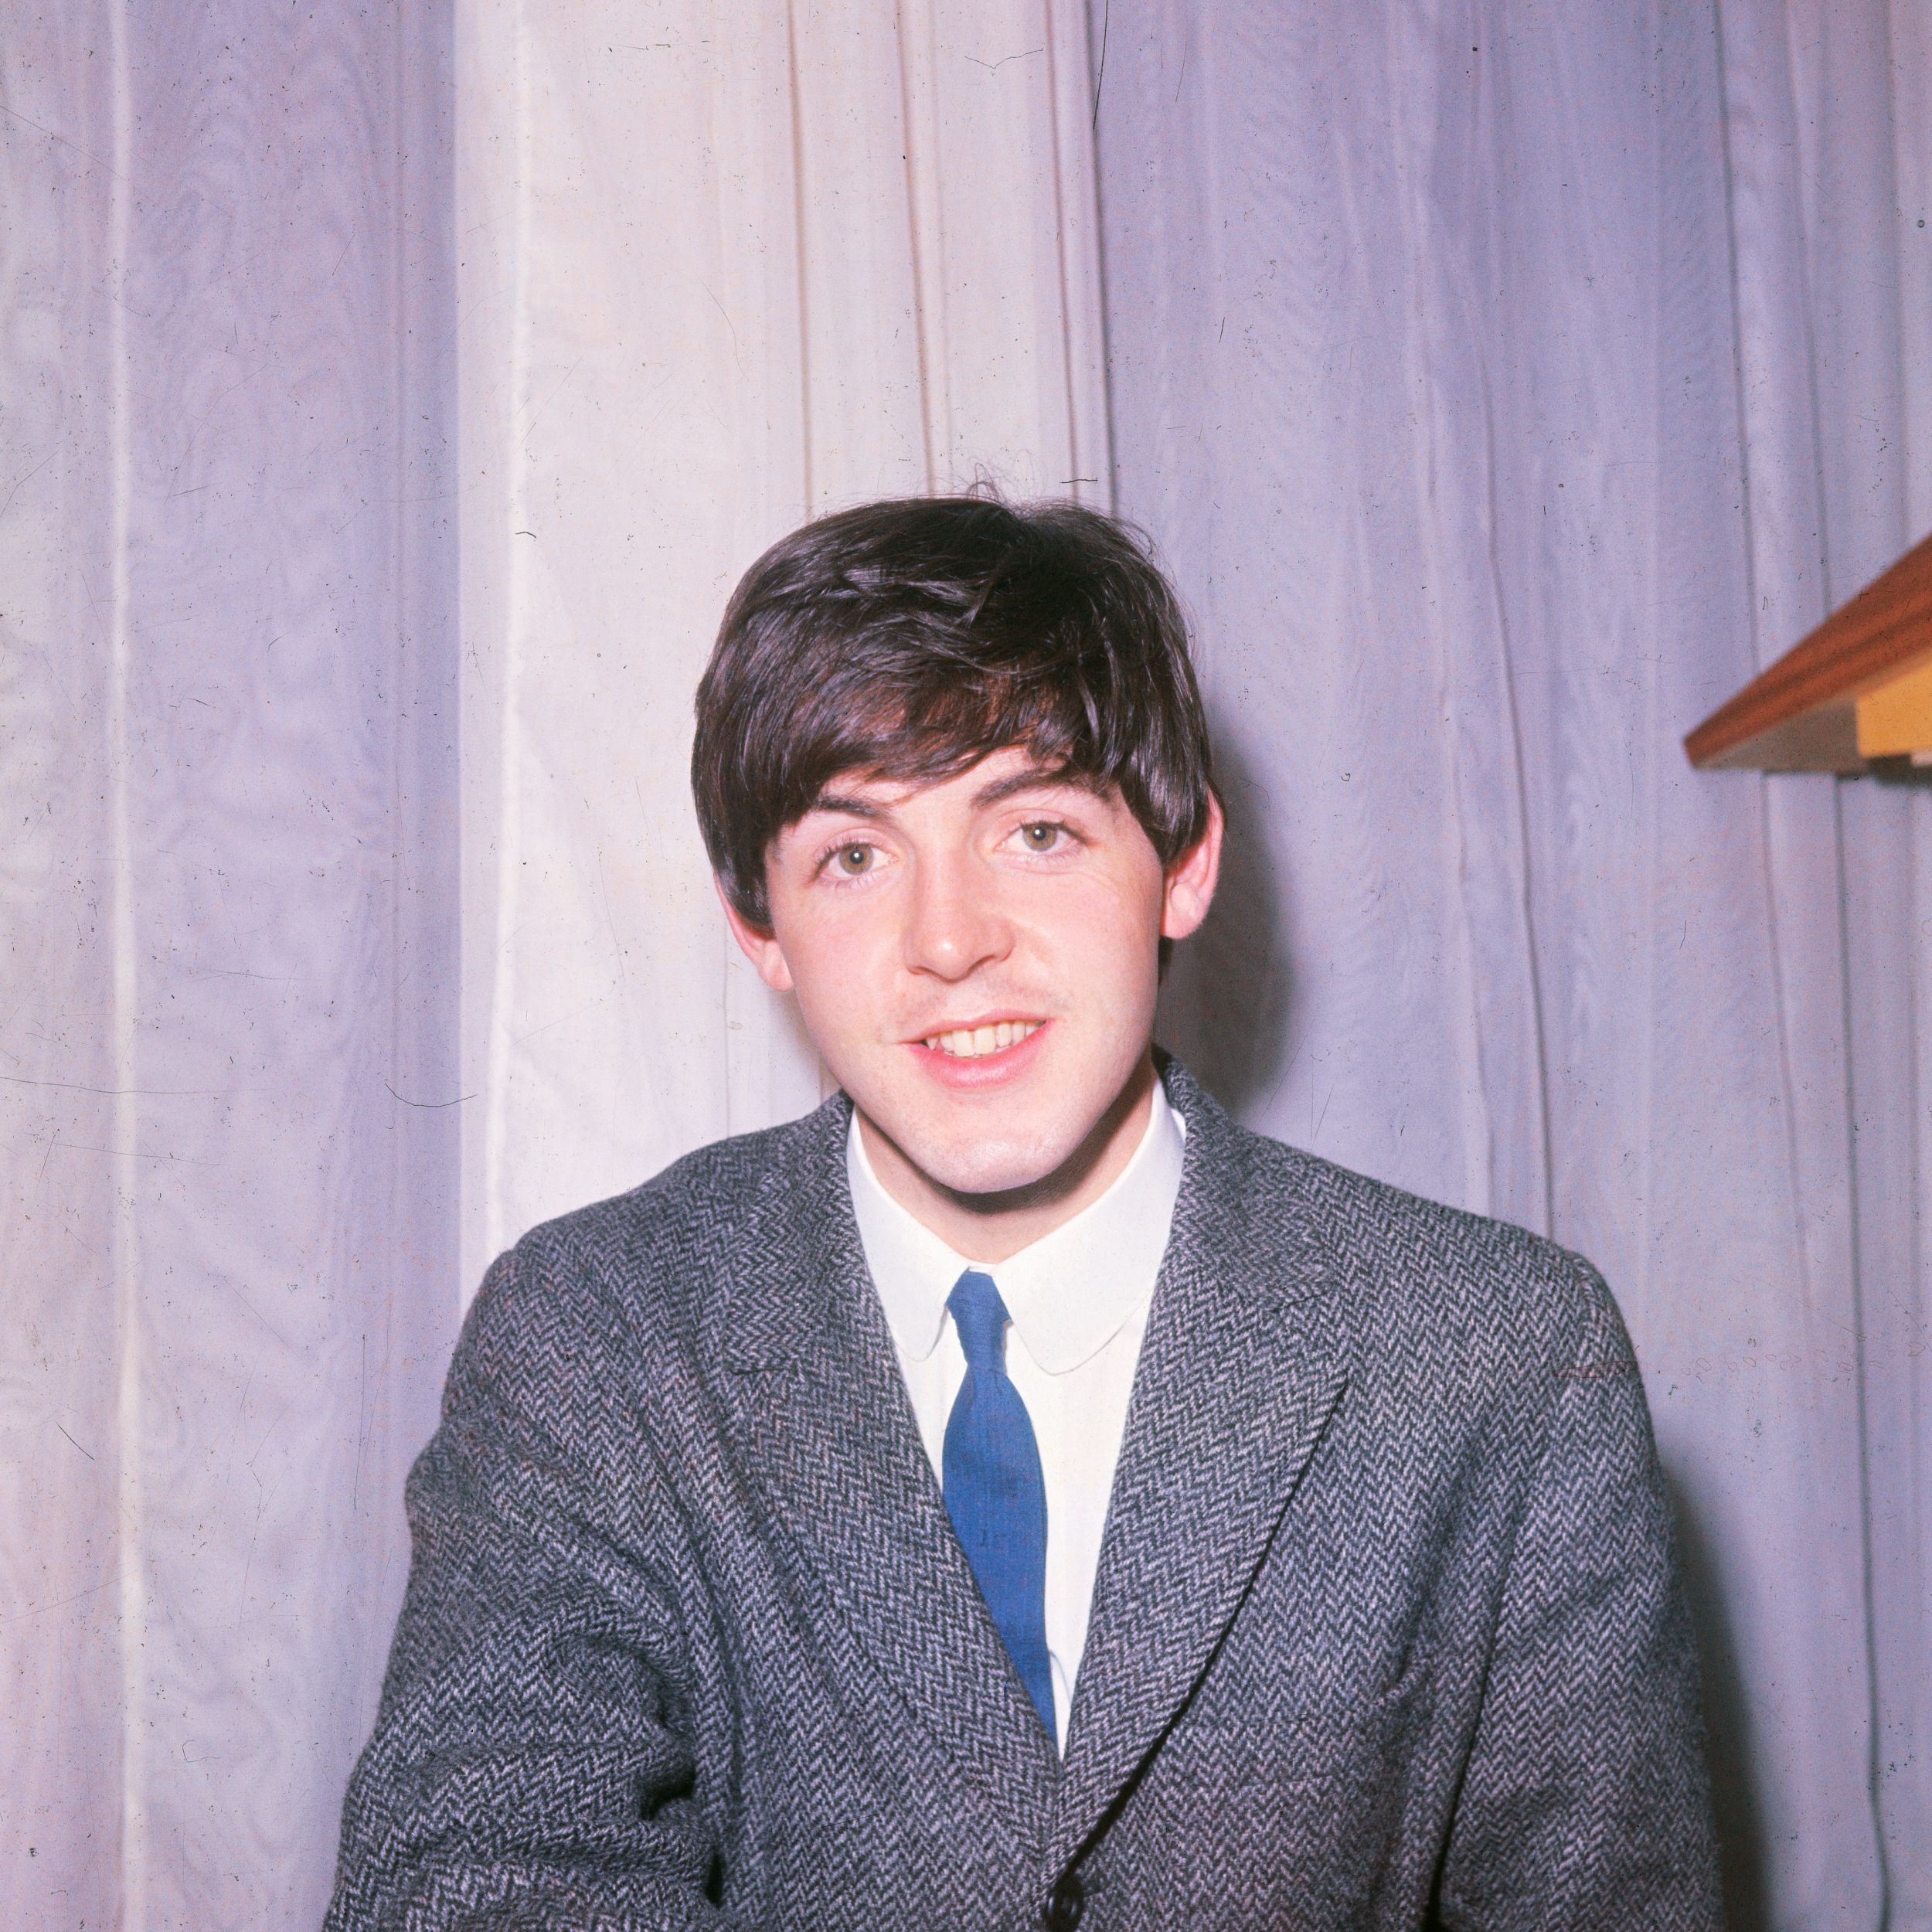 Paul McCartney photo, pics, wallpaper - photo #426166